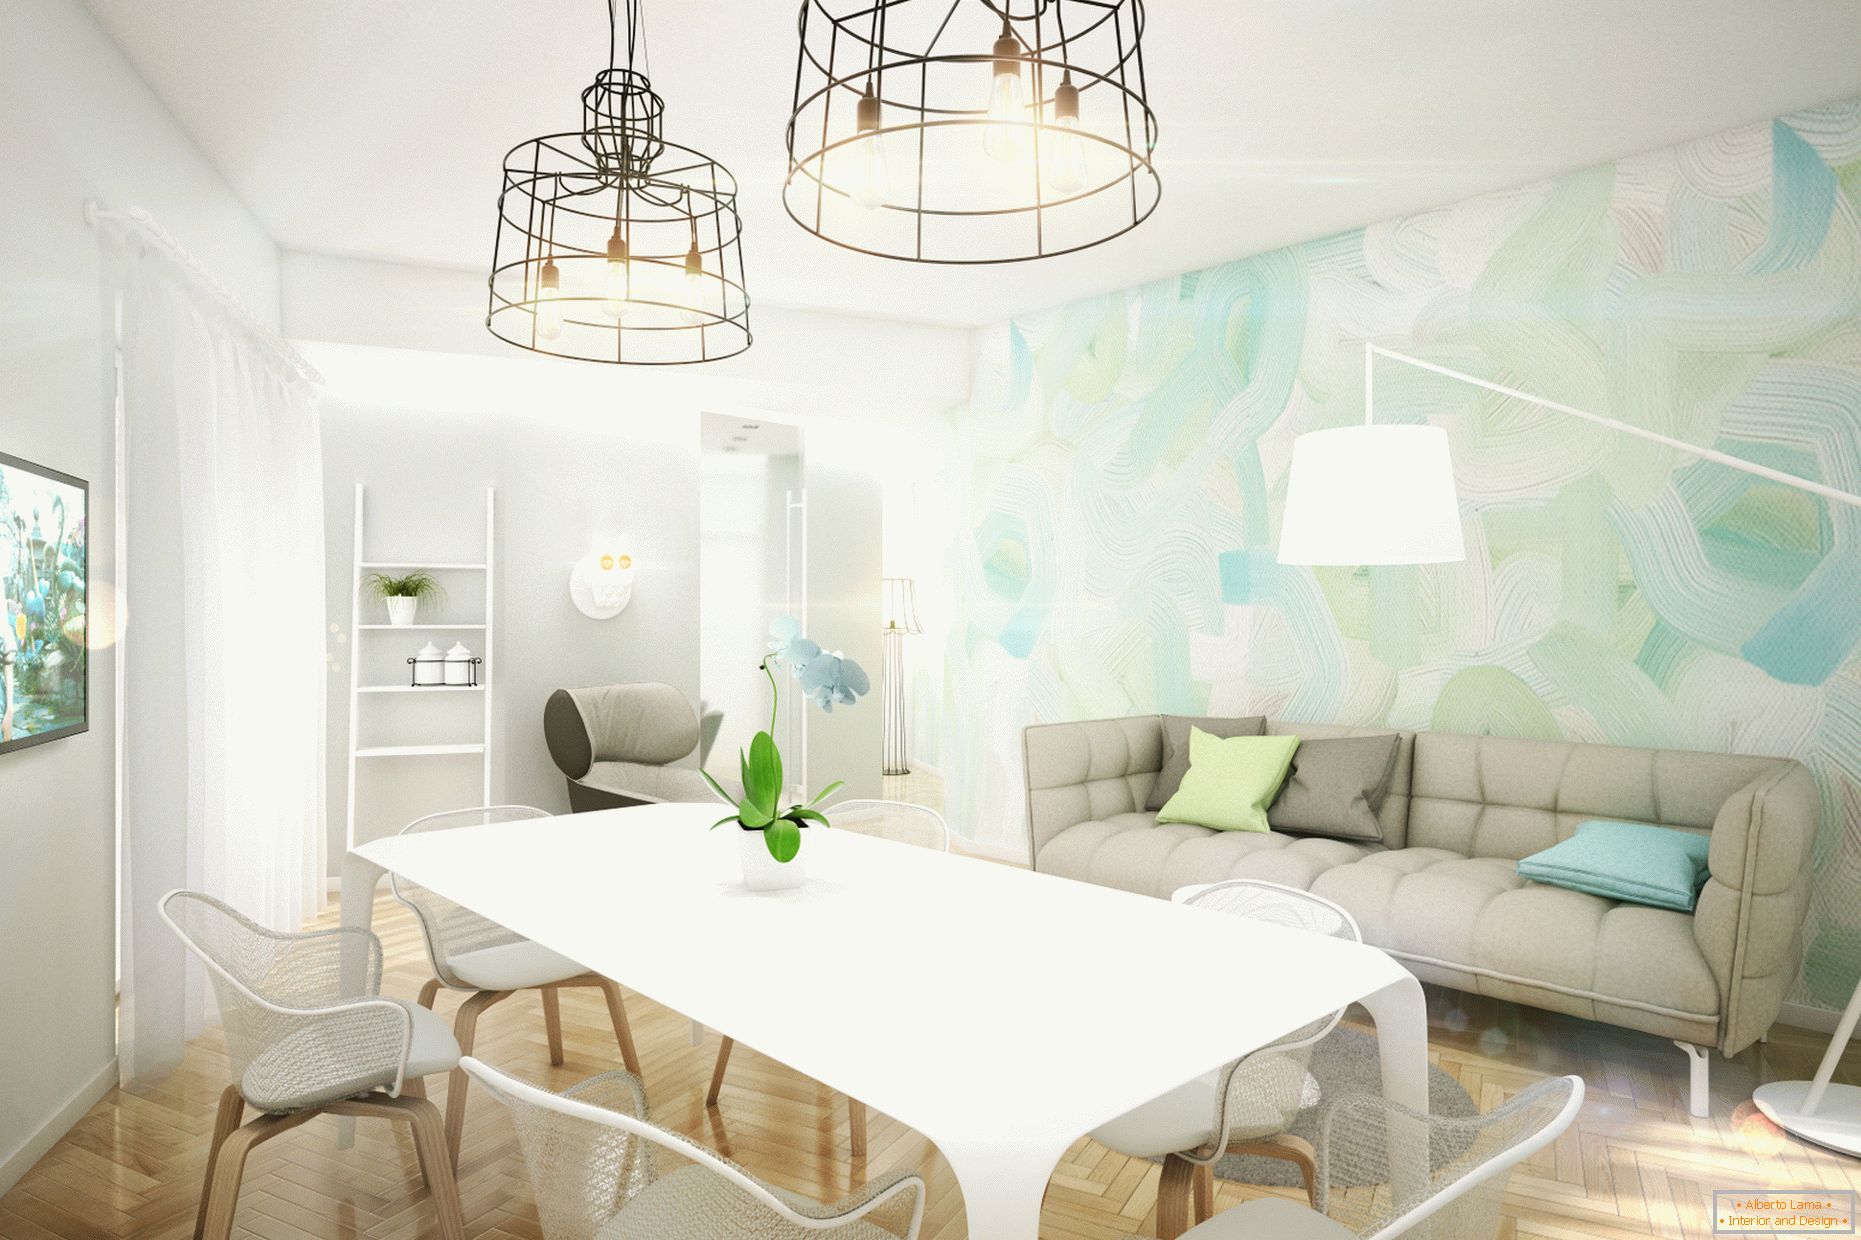 Design apartment in pastel colors: living room